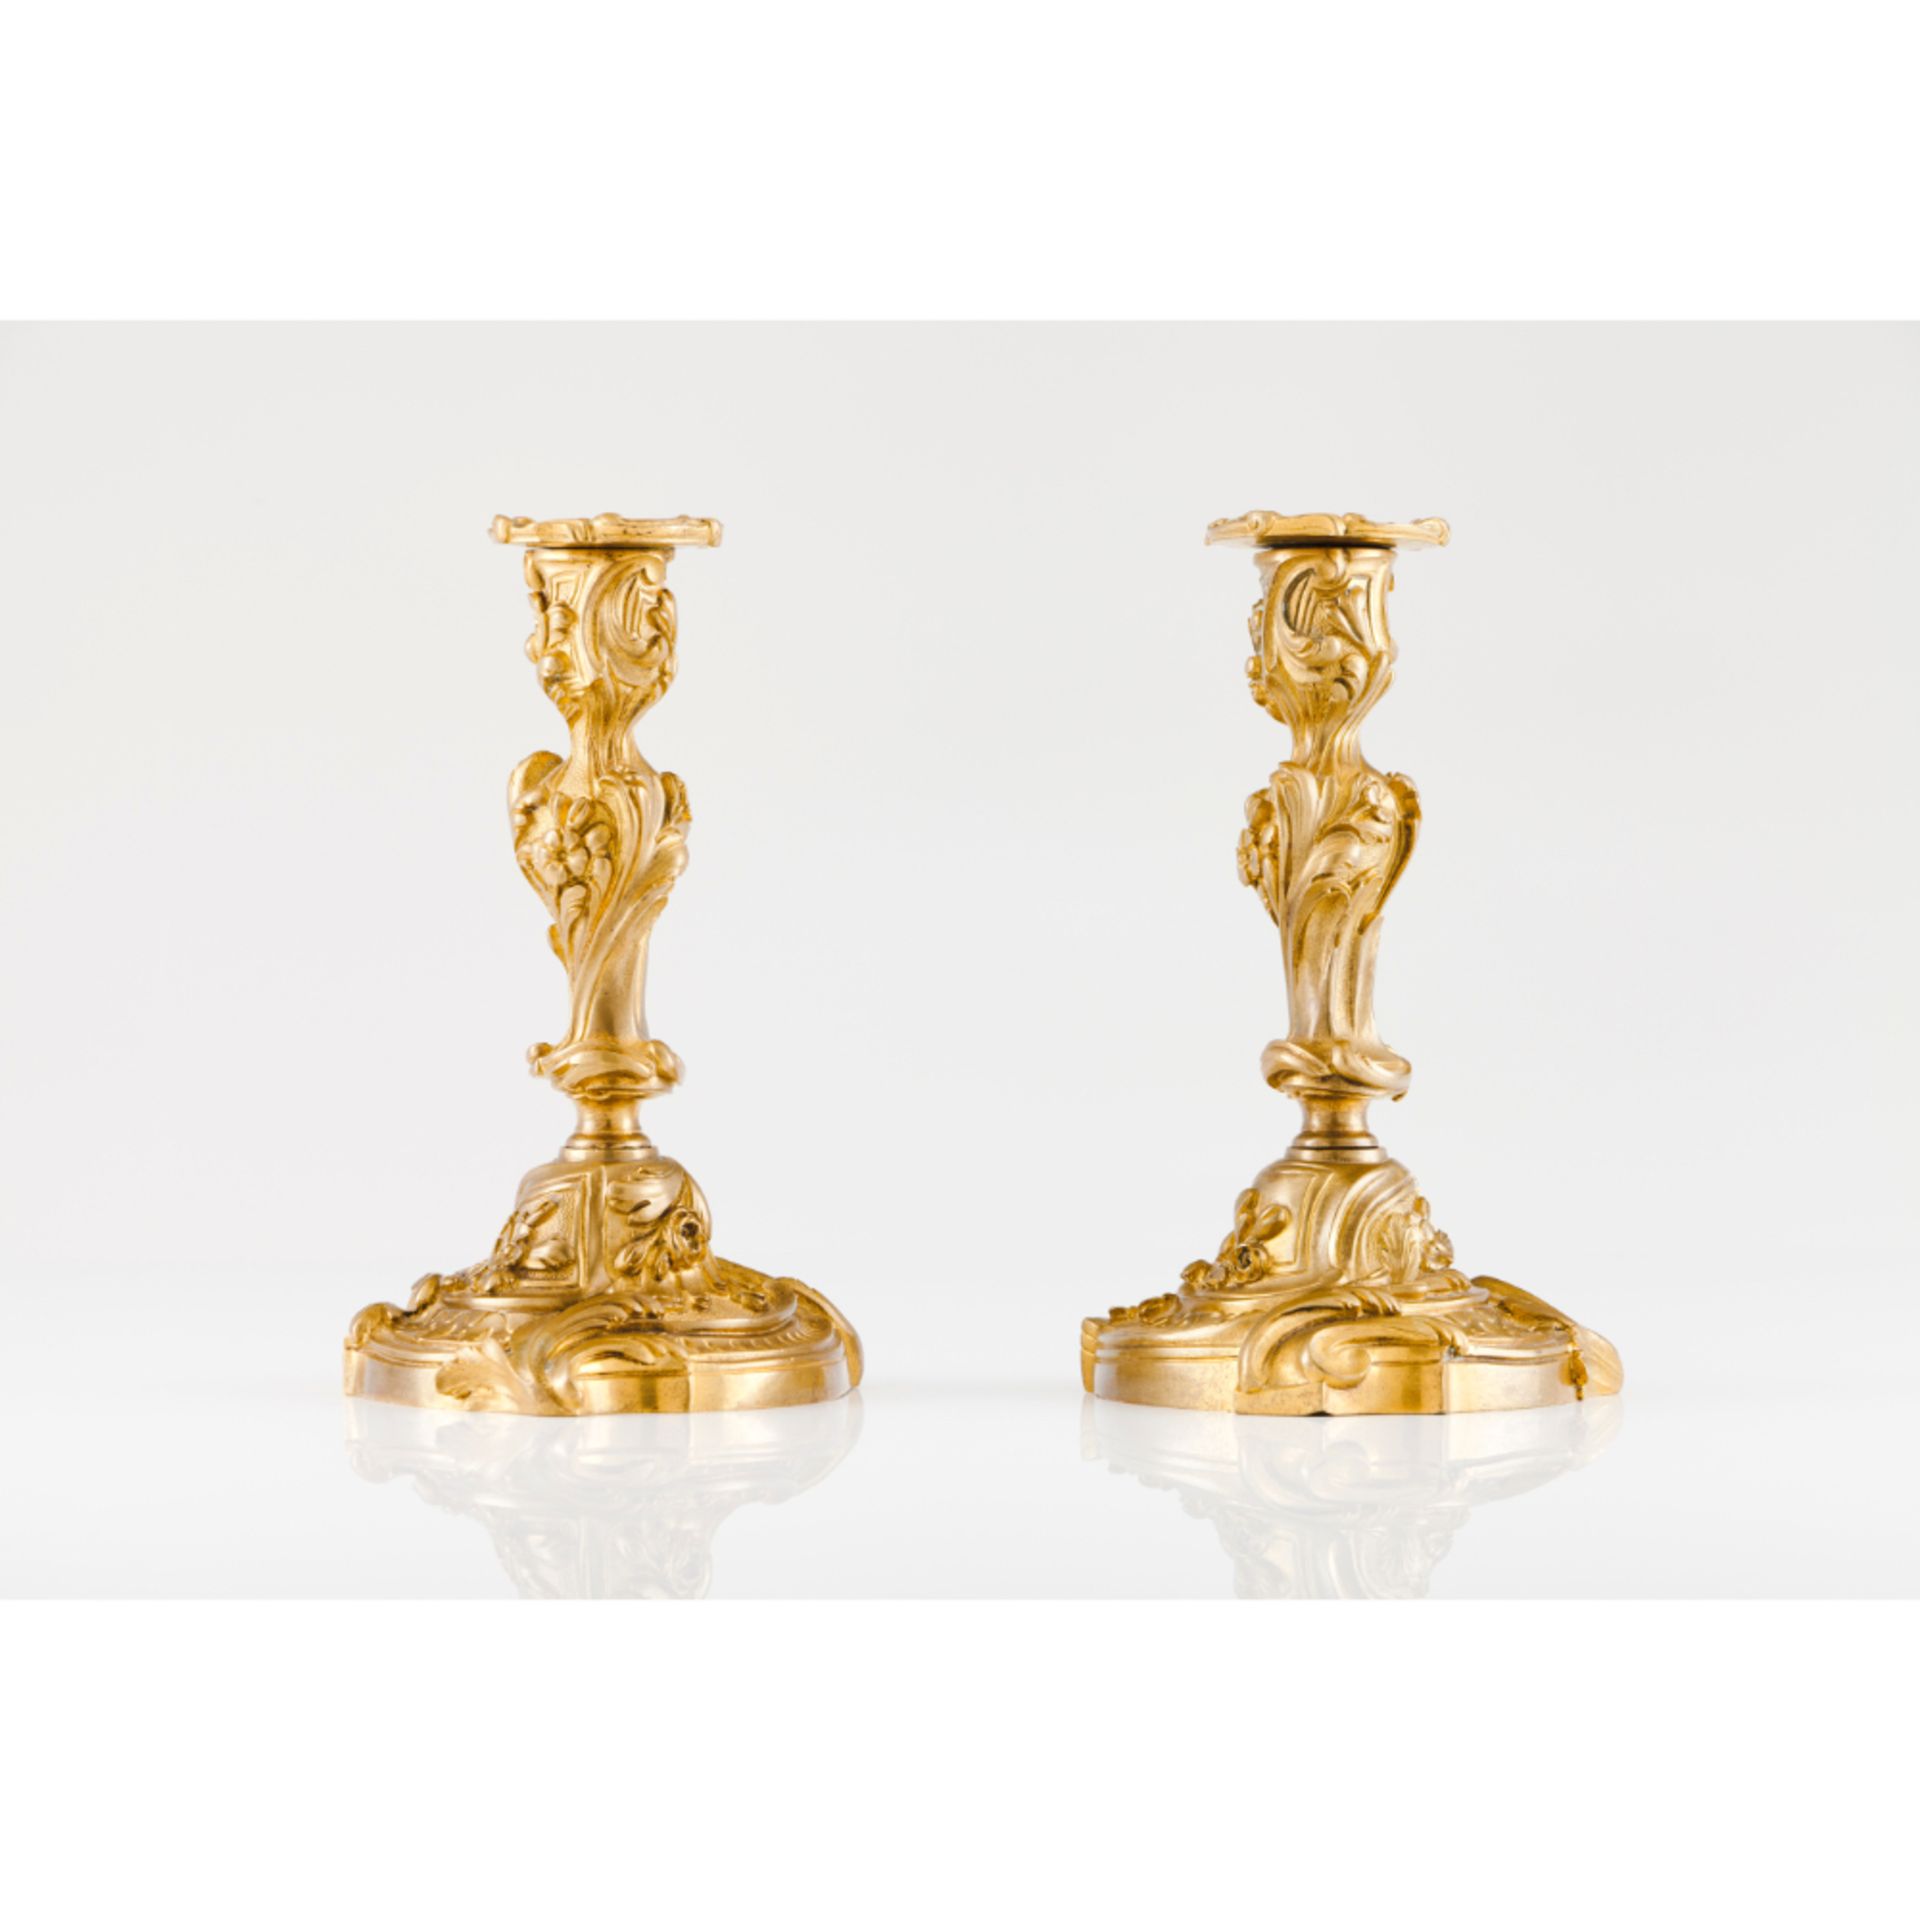 A pair of Rococo Louis XV period candlesticks